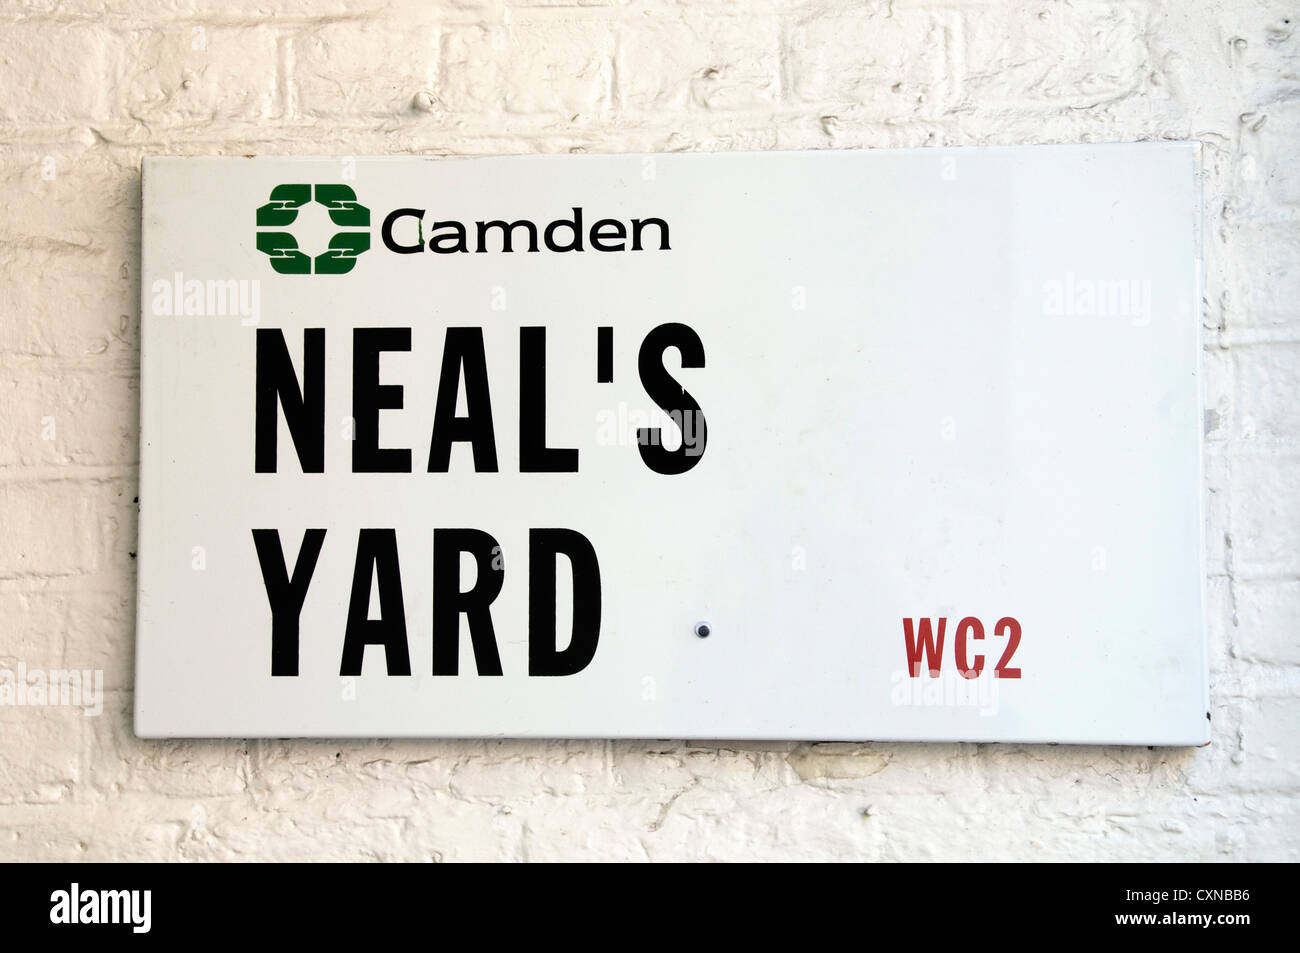 Neal's Yard strada segno Foto Stock